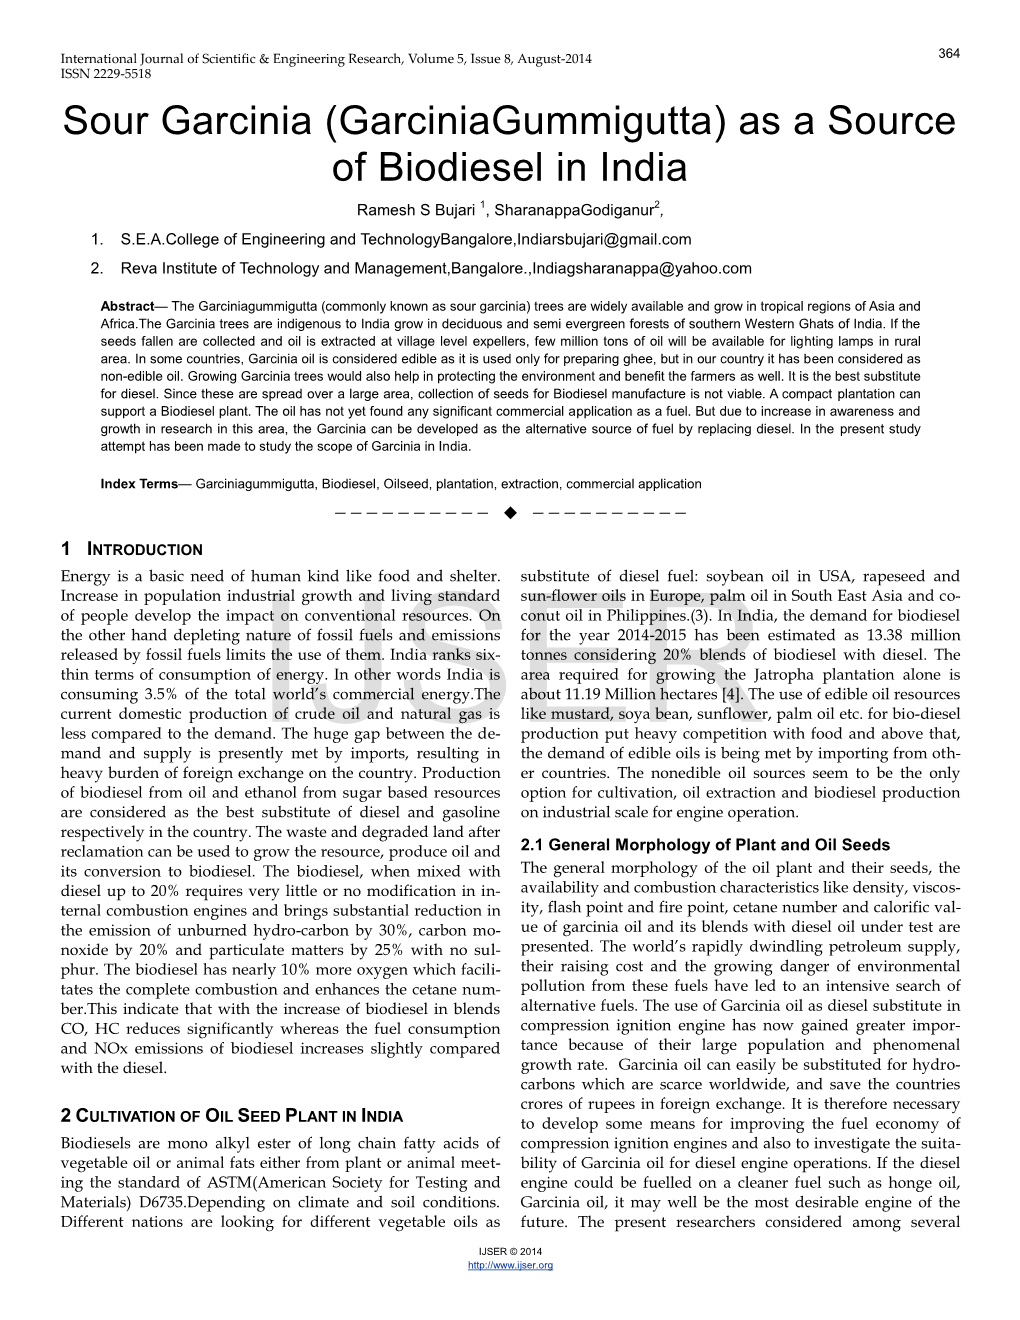 Sour Garcinia (Garciniagummigutta) As a Source of Biodiesel in India Ramesh S Bujari 1, Sharanappagodiganur2, 1